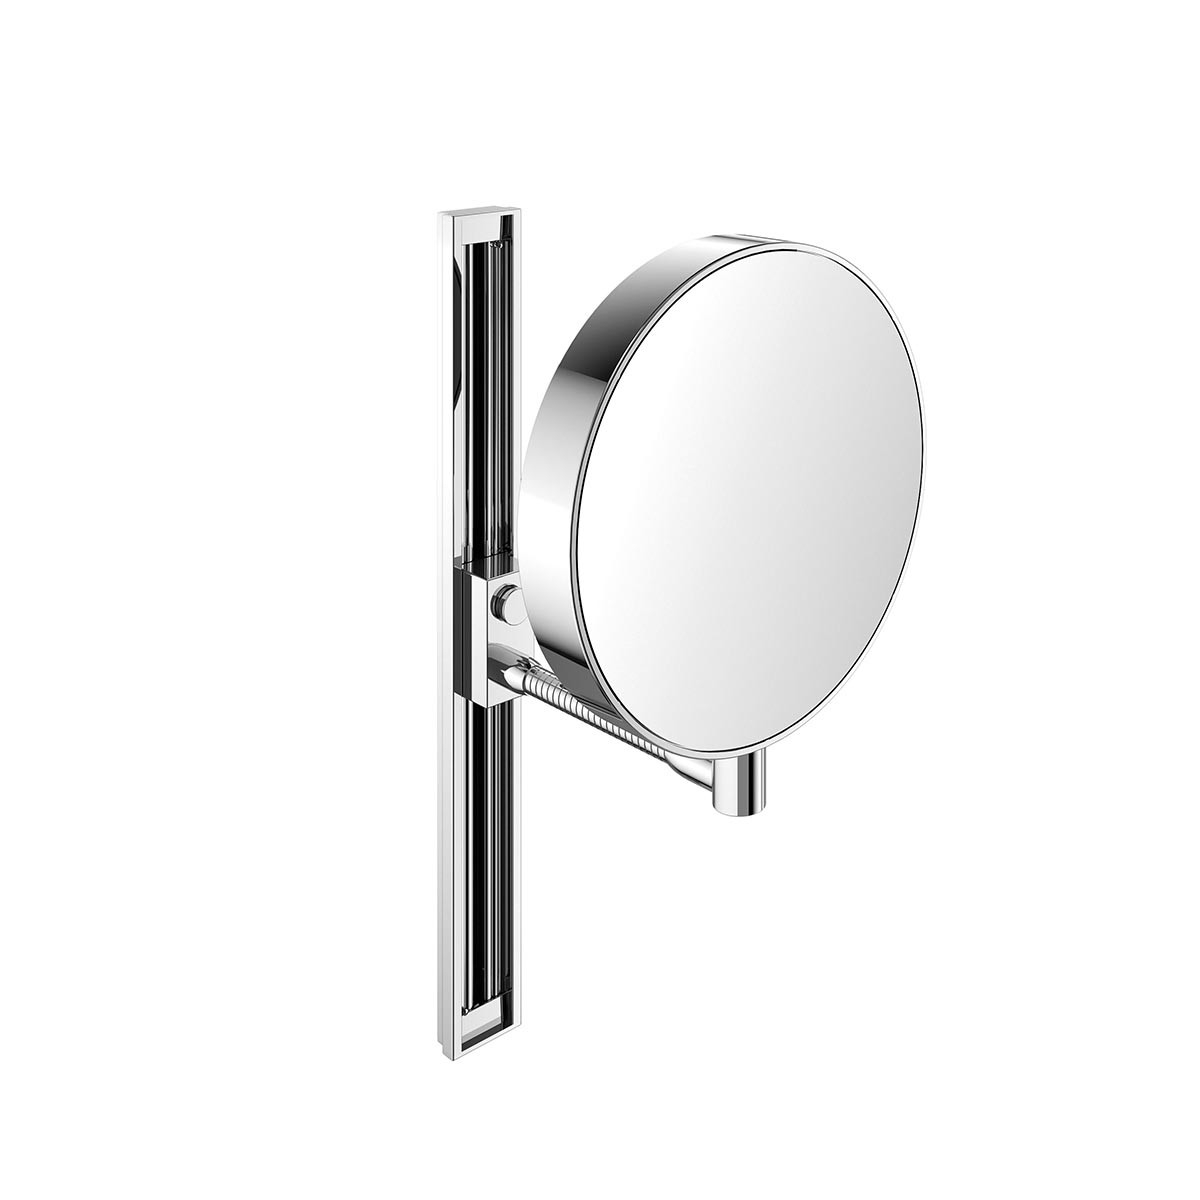 Imago Height Adjustable Magnifying Mirror 7x/3x